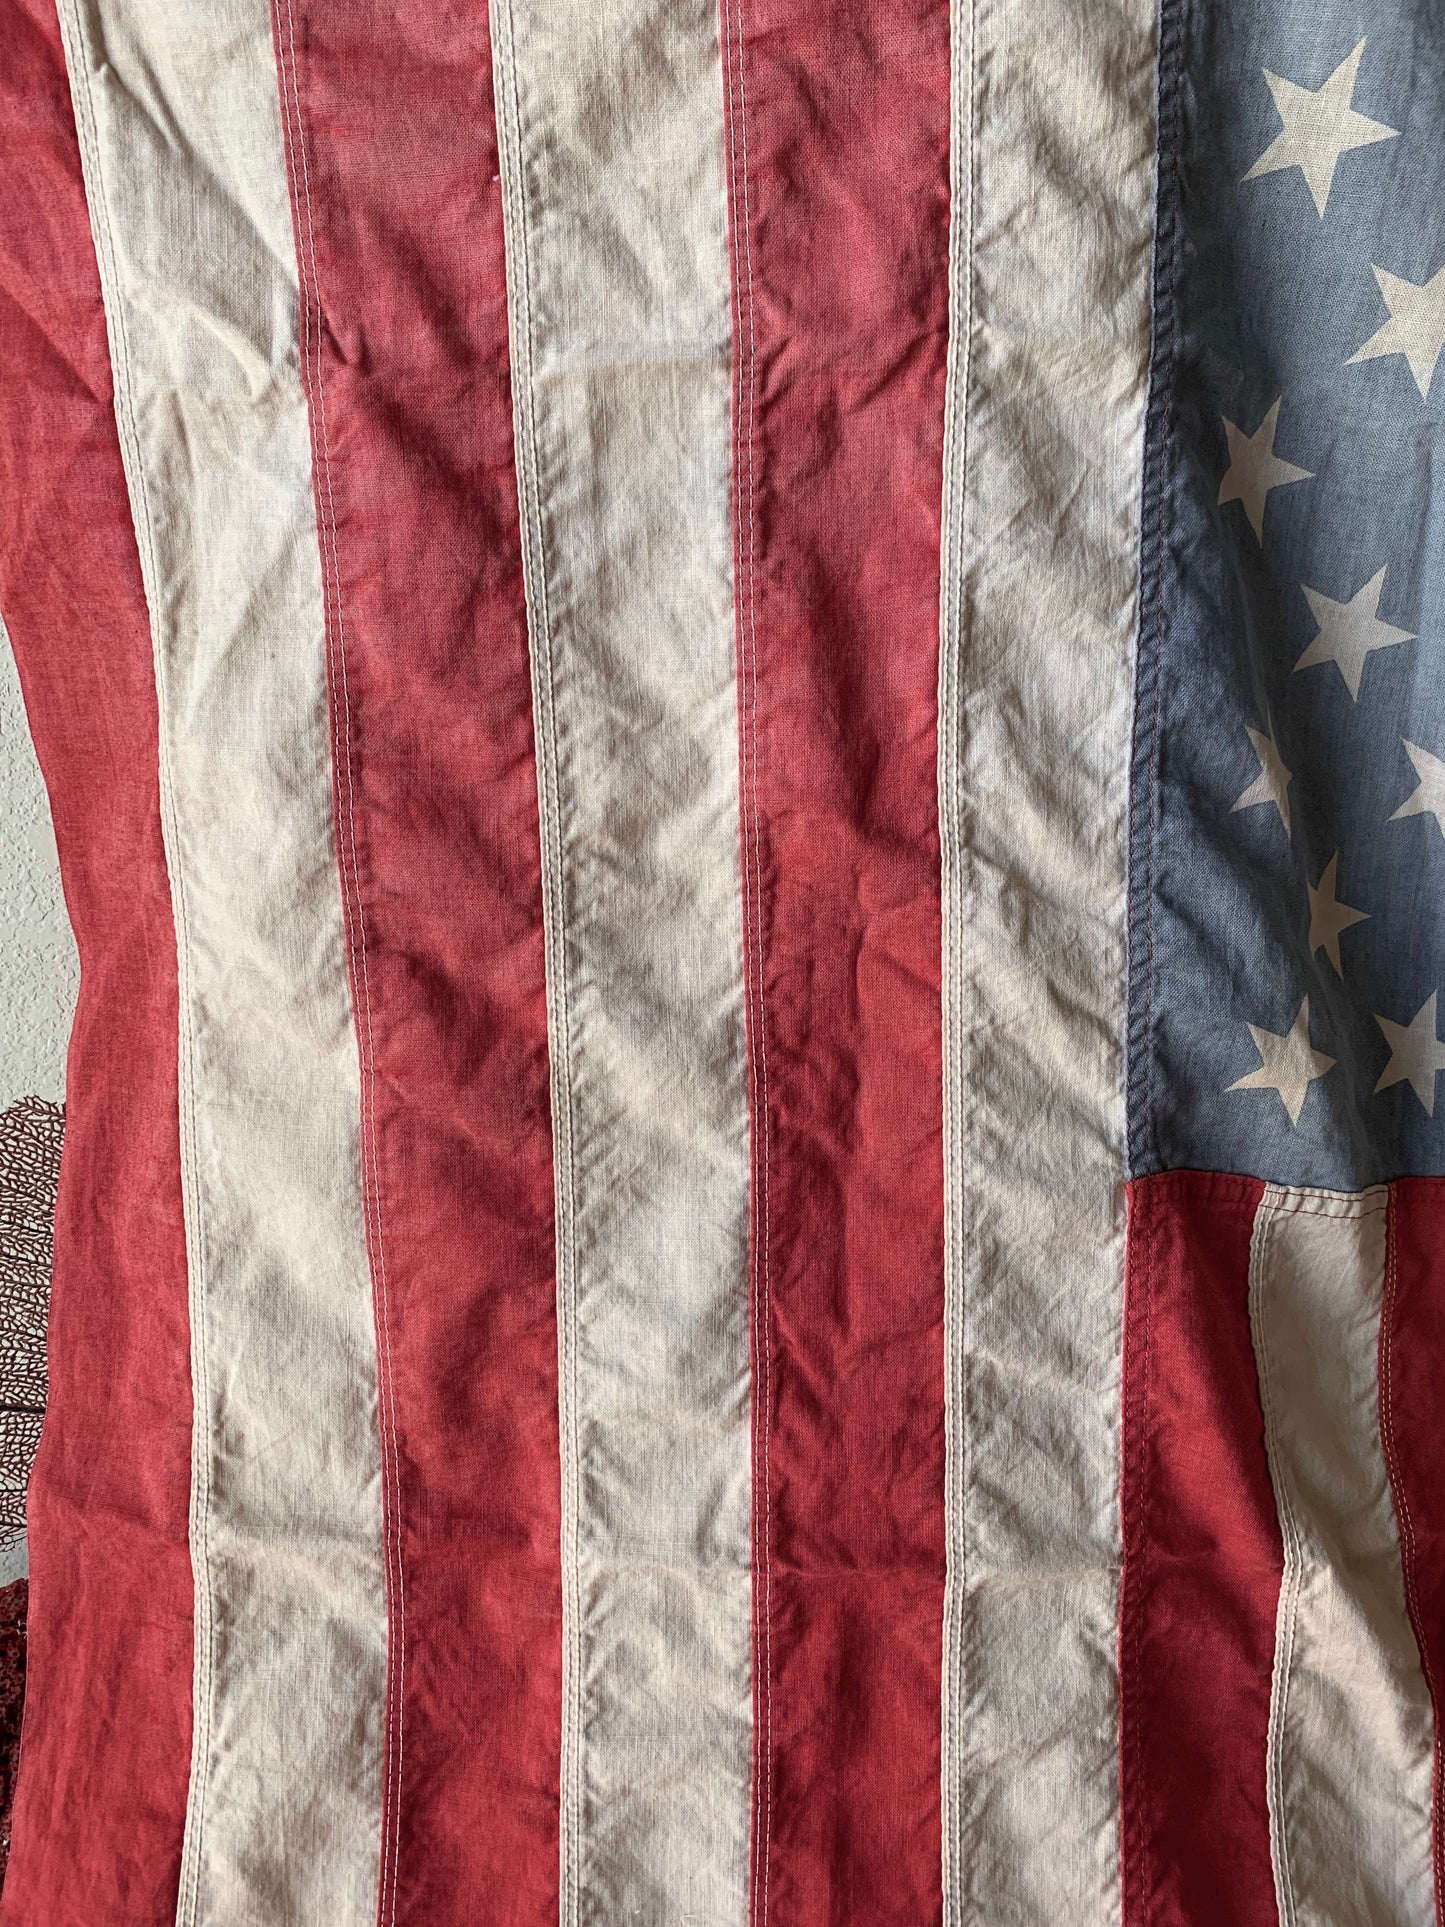 Vintage aged worn 50 star American flag